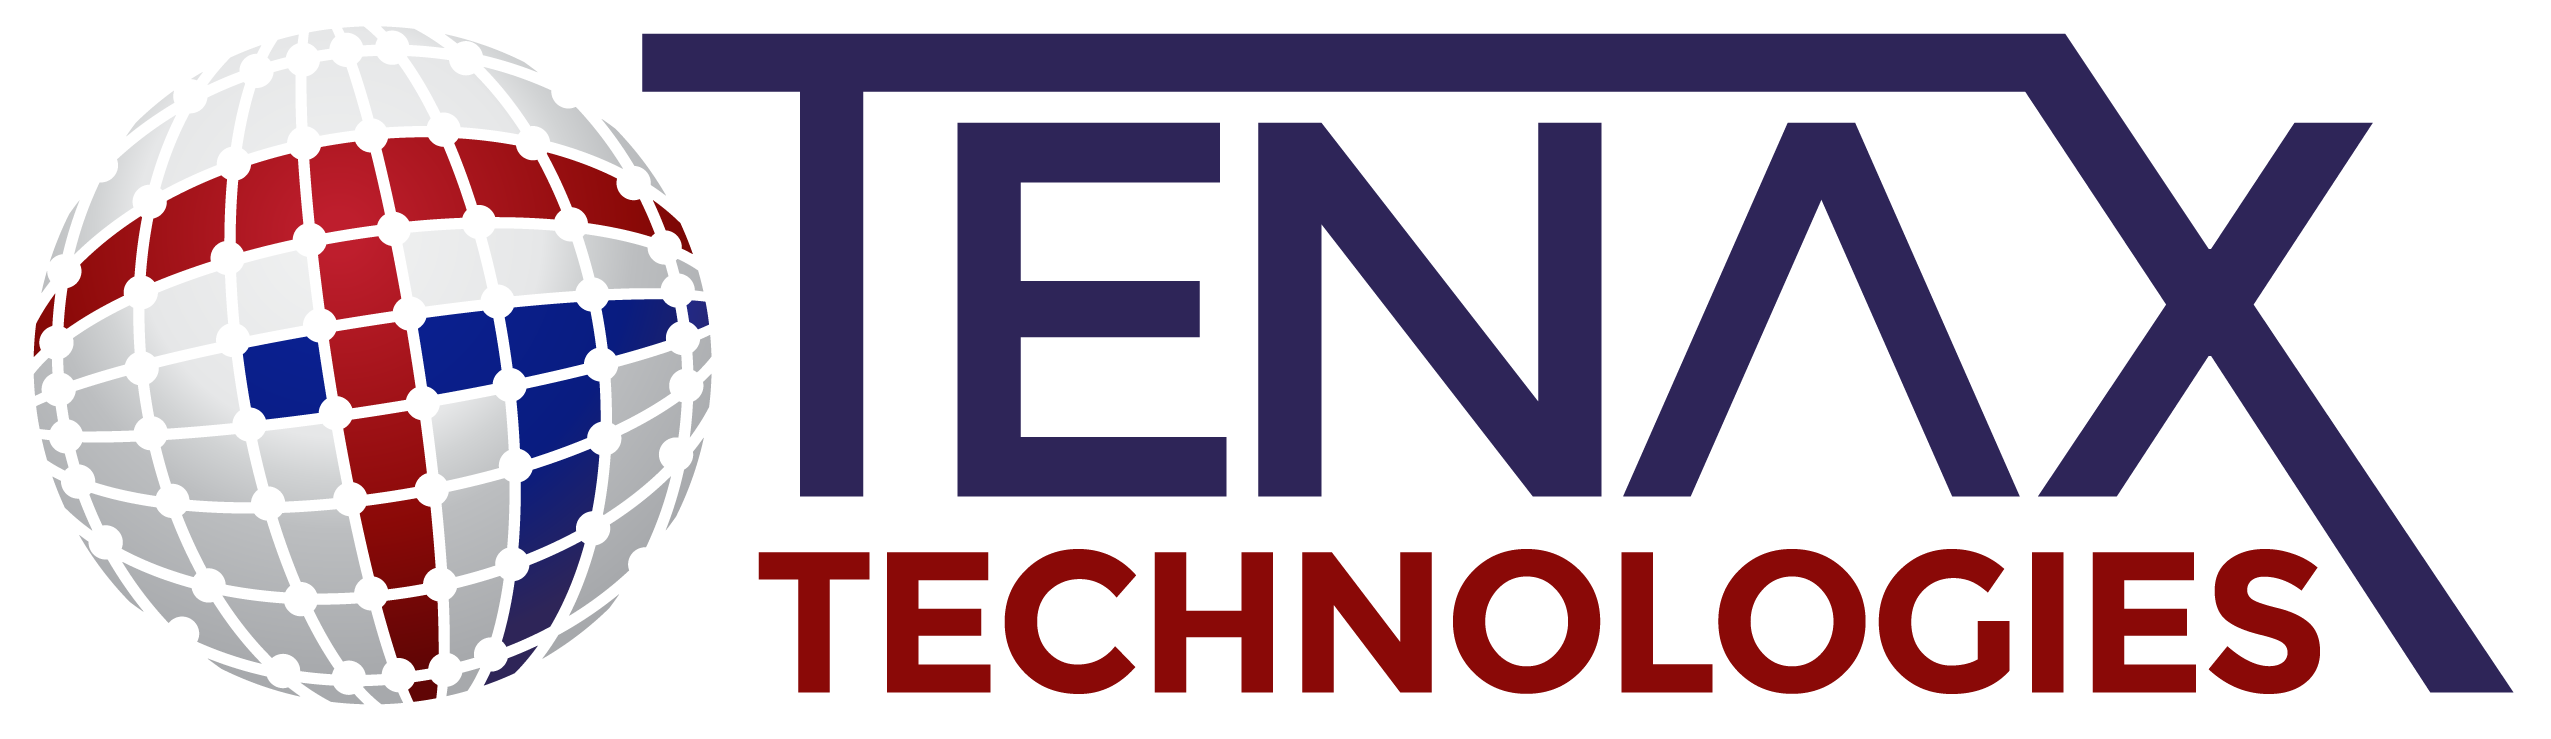 TENAX Technologies logo